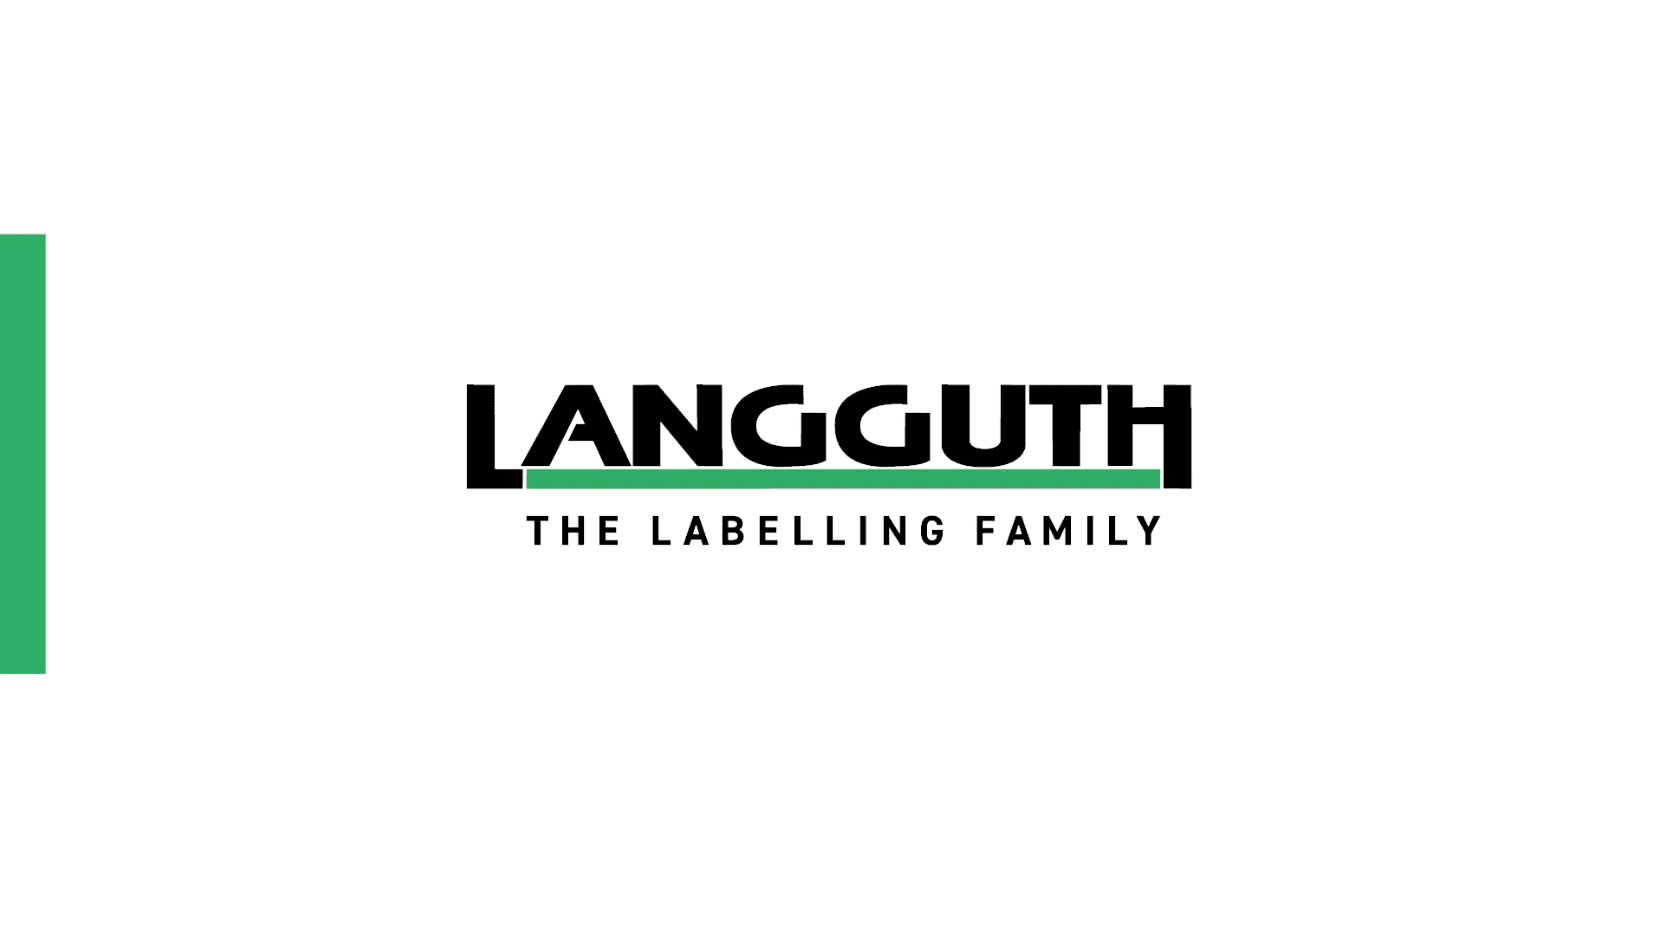 (c) Langguth.com